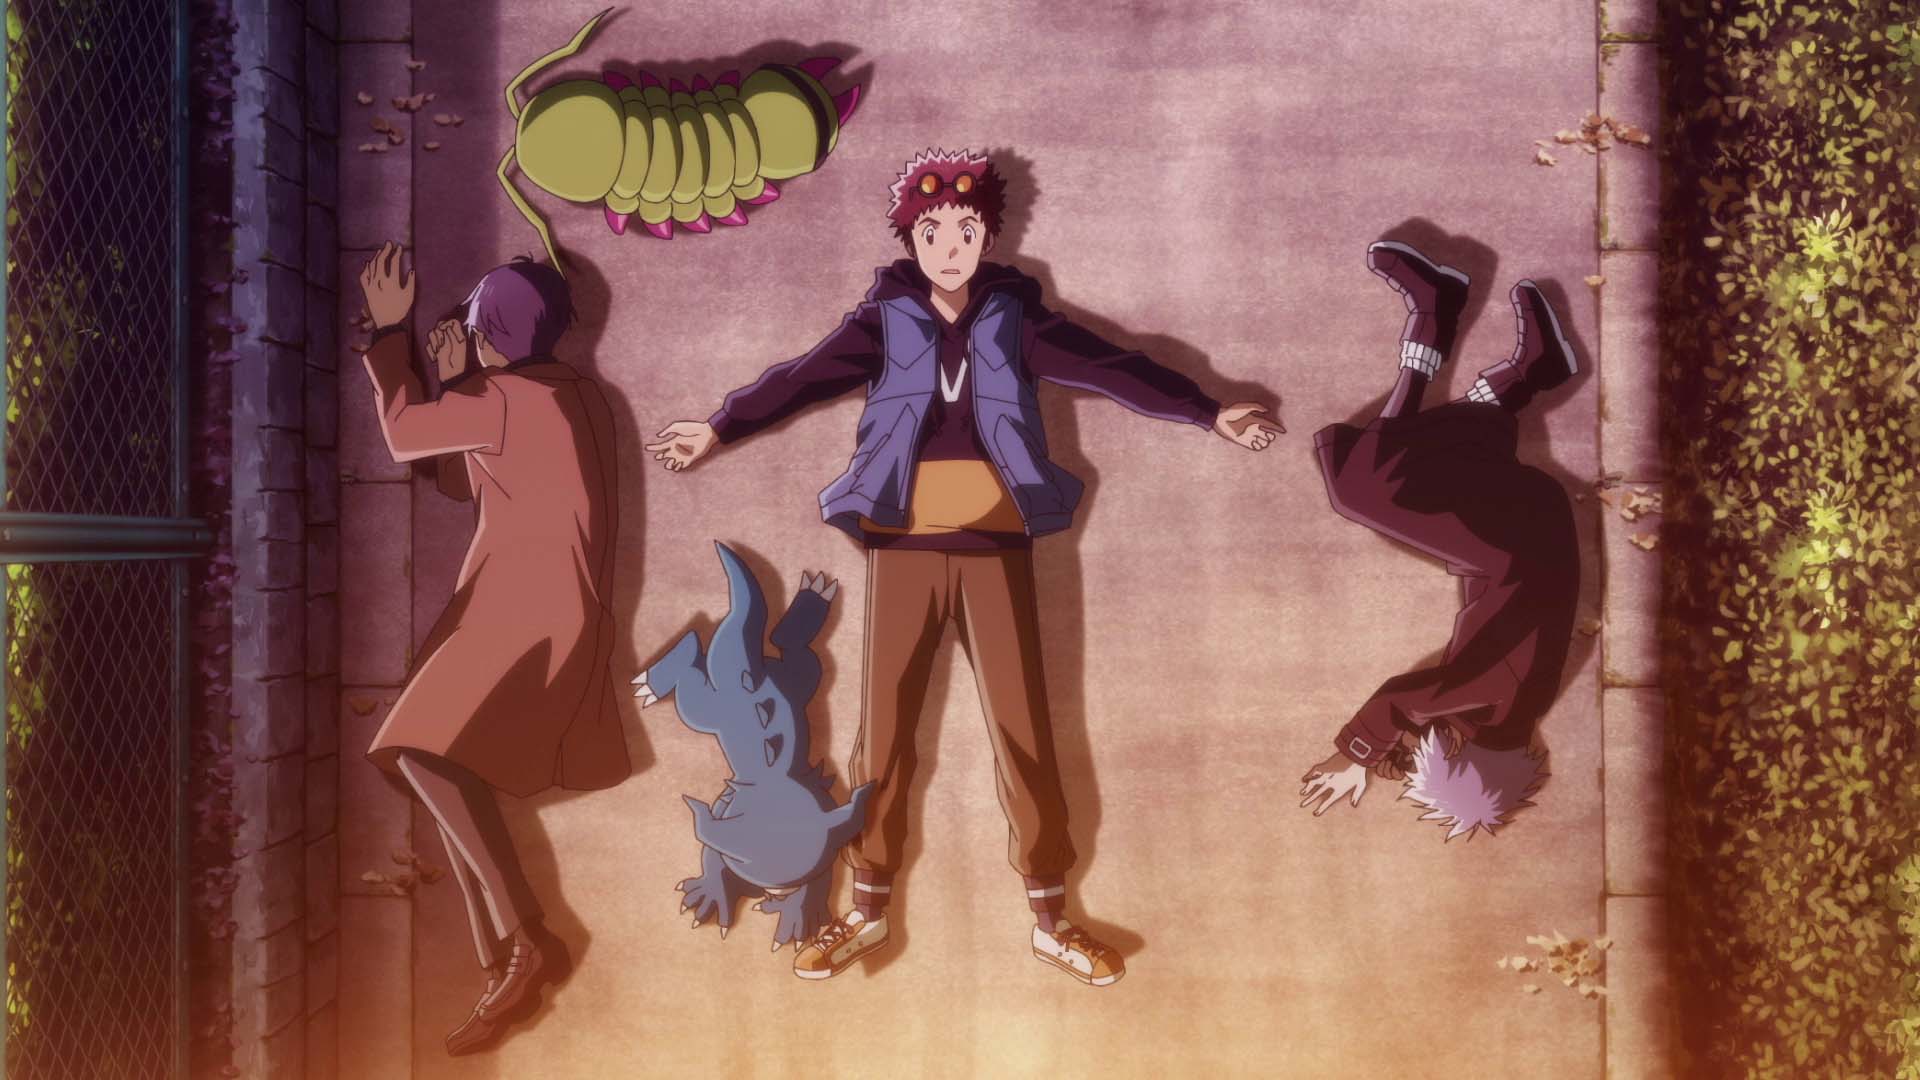 Digimon:SR: Digimon Adventure 02 The Beginning [Sub] (Spoiler-Free)